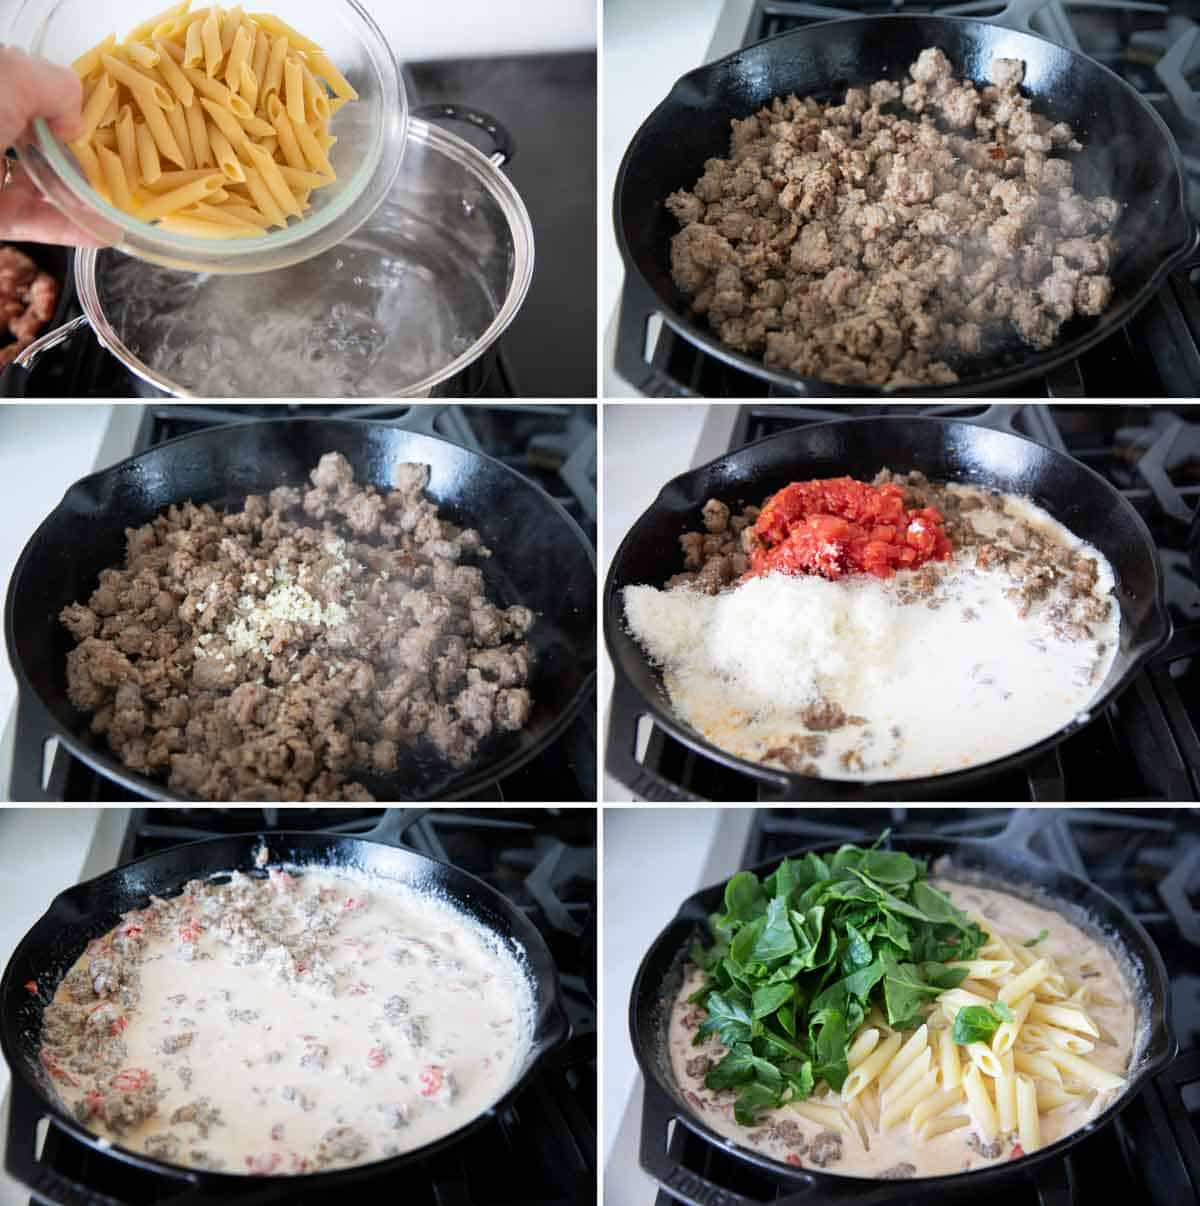 Steps to make tuscan pasta with sausage.